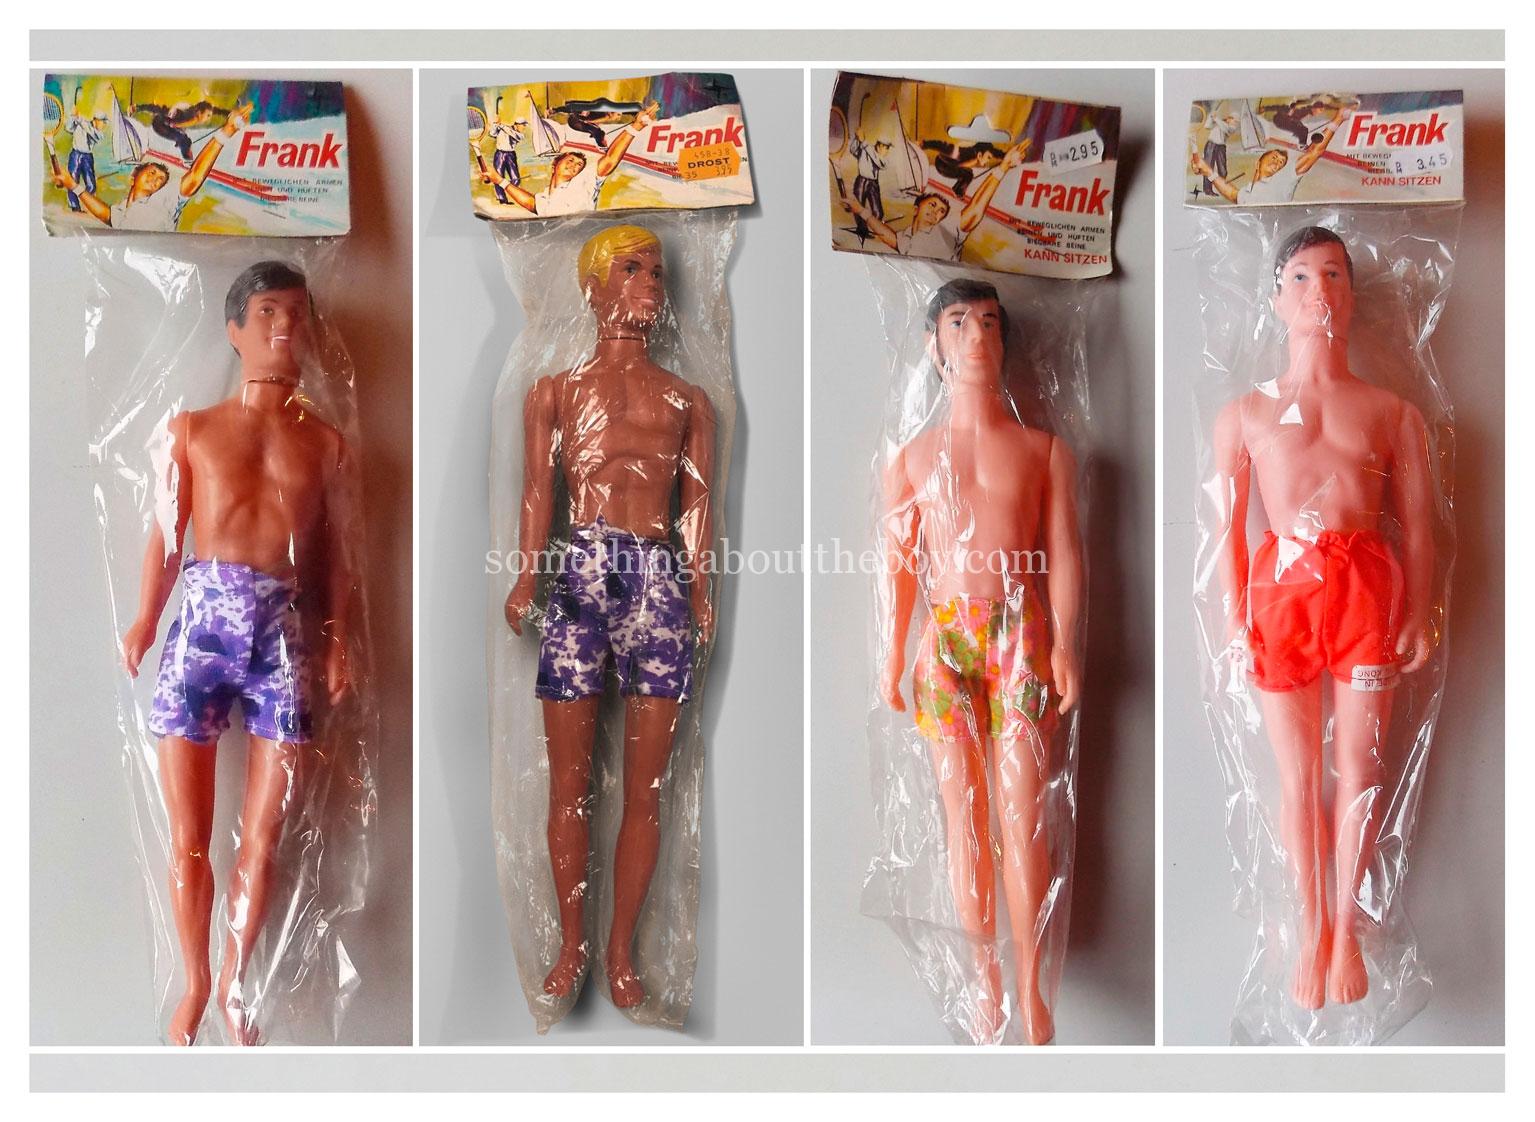 German-market Frank dolls (shorts) in original packaging